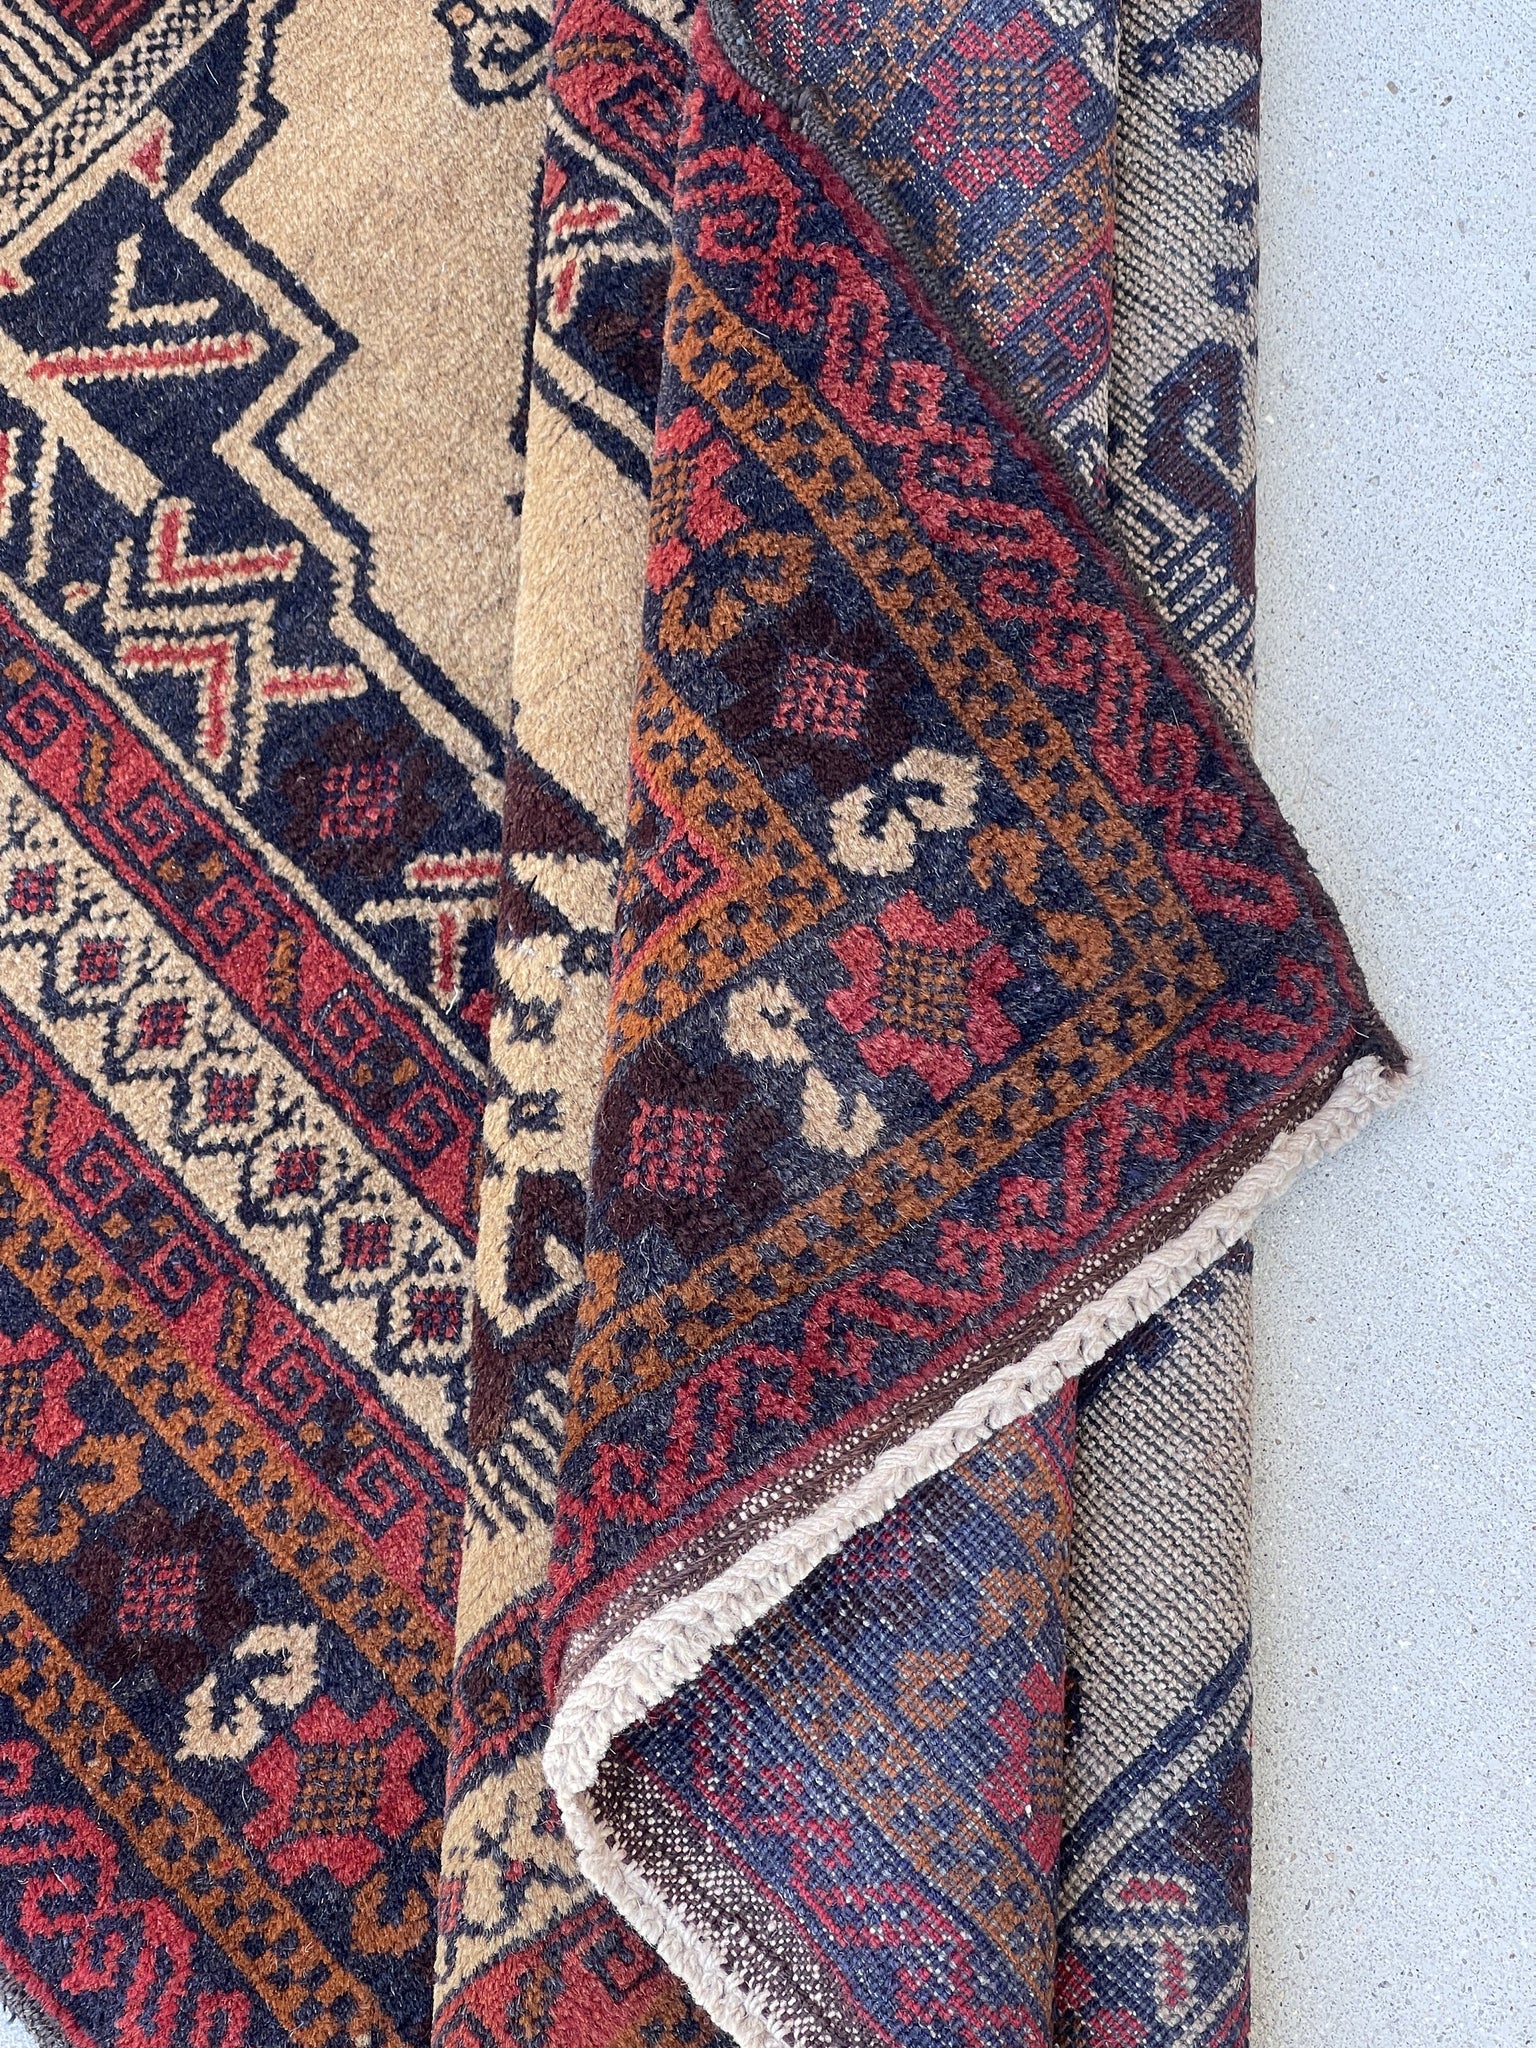 3x5 (90x150) Handmade Vintage Afghan Rug | Red Mocha Peanut Brown Beige Tan | Nomadic Baluch Boho Bohemian Tribal Turkish Moroccan Wool